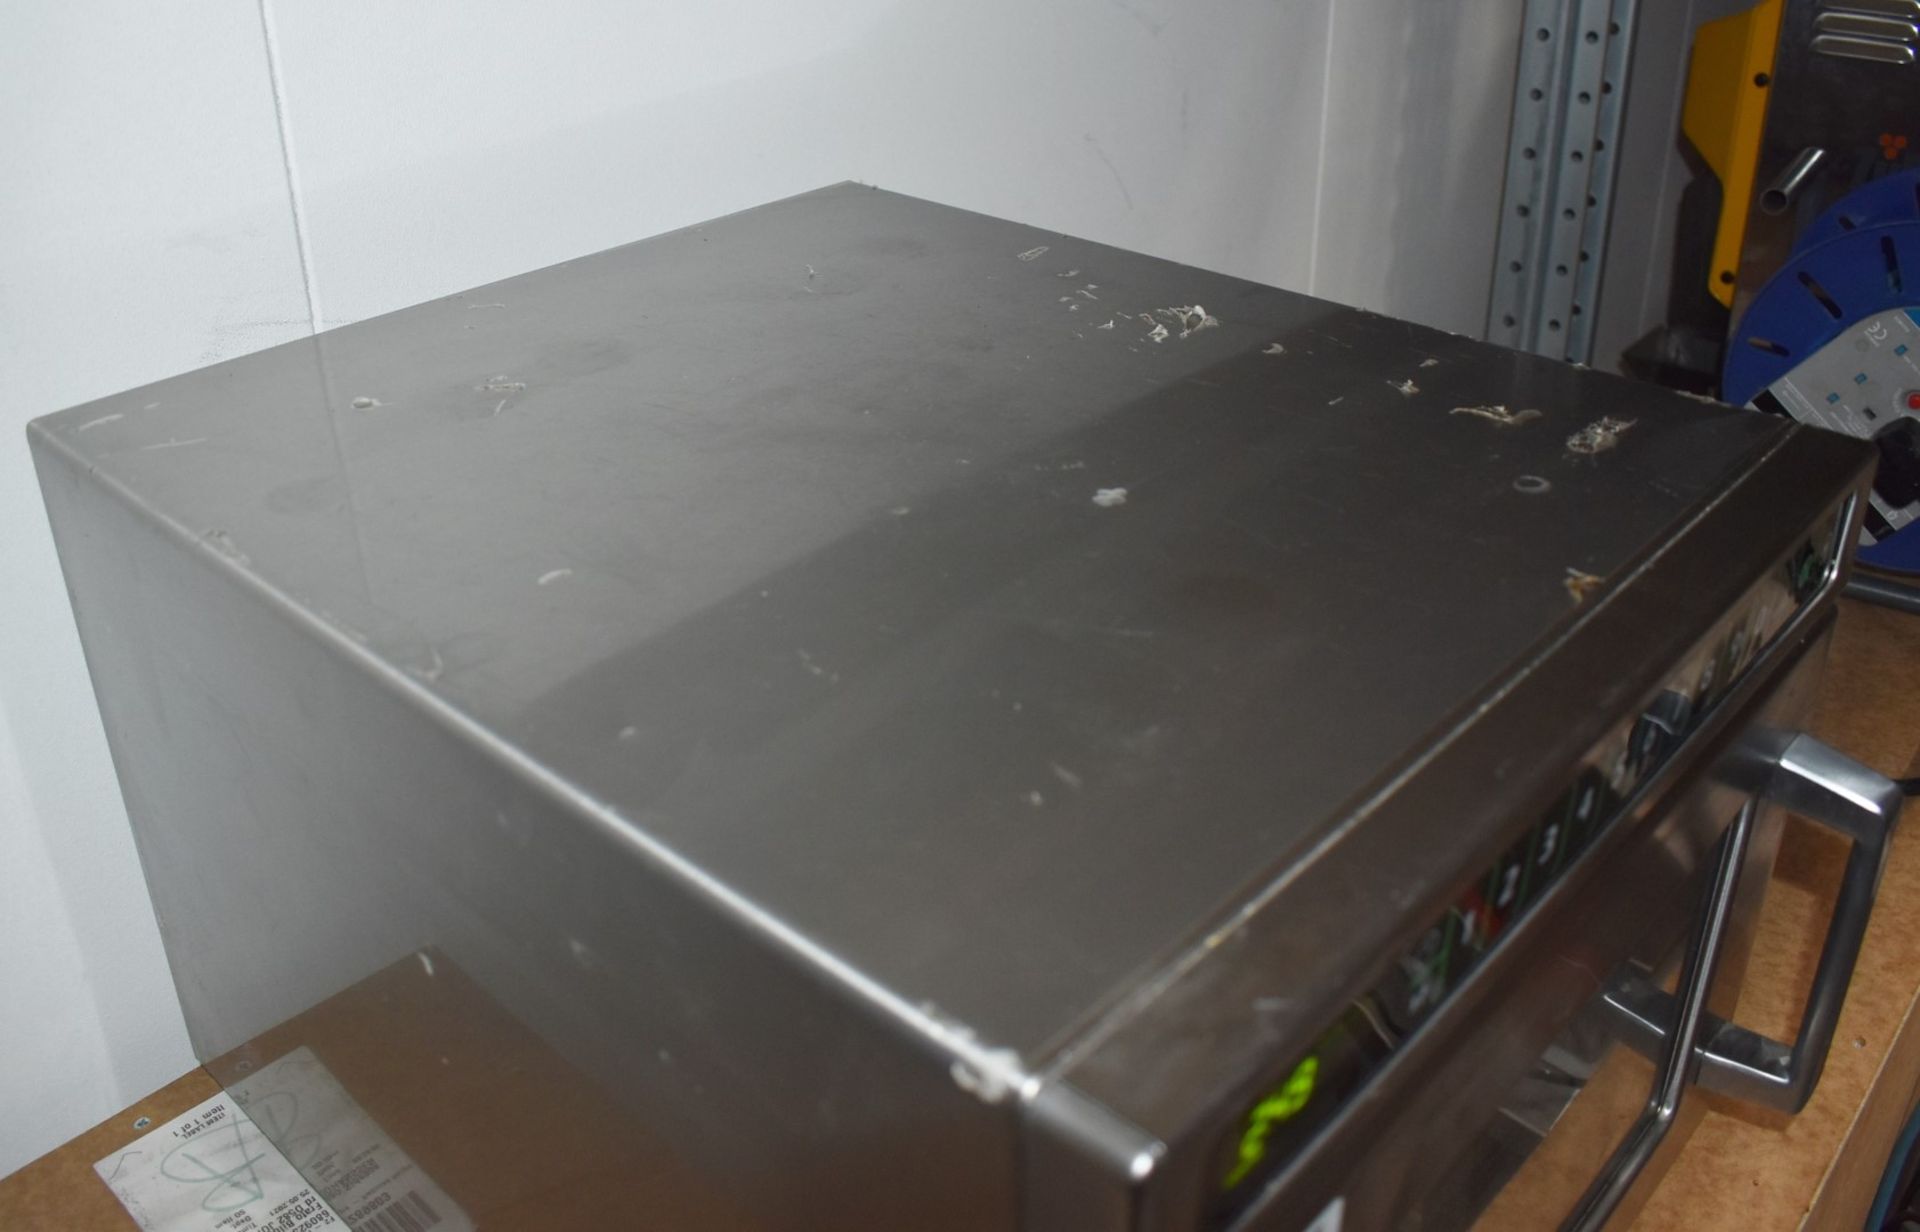 1 x Menumaster Commercial Microwave Oven - Model DEC14E2U - 1.4kW, 13A, 17Ltr - 2018 Model - - Image 12 of 12